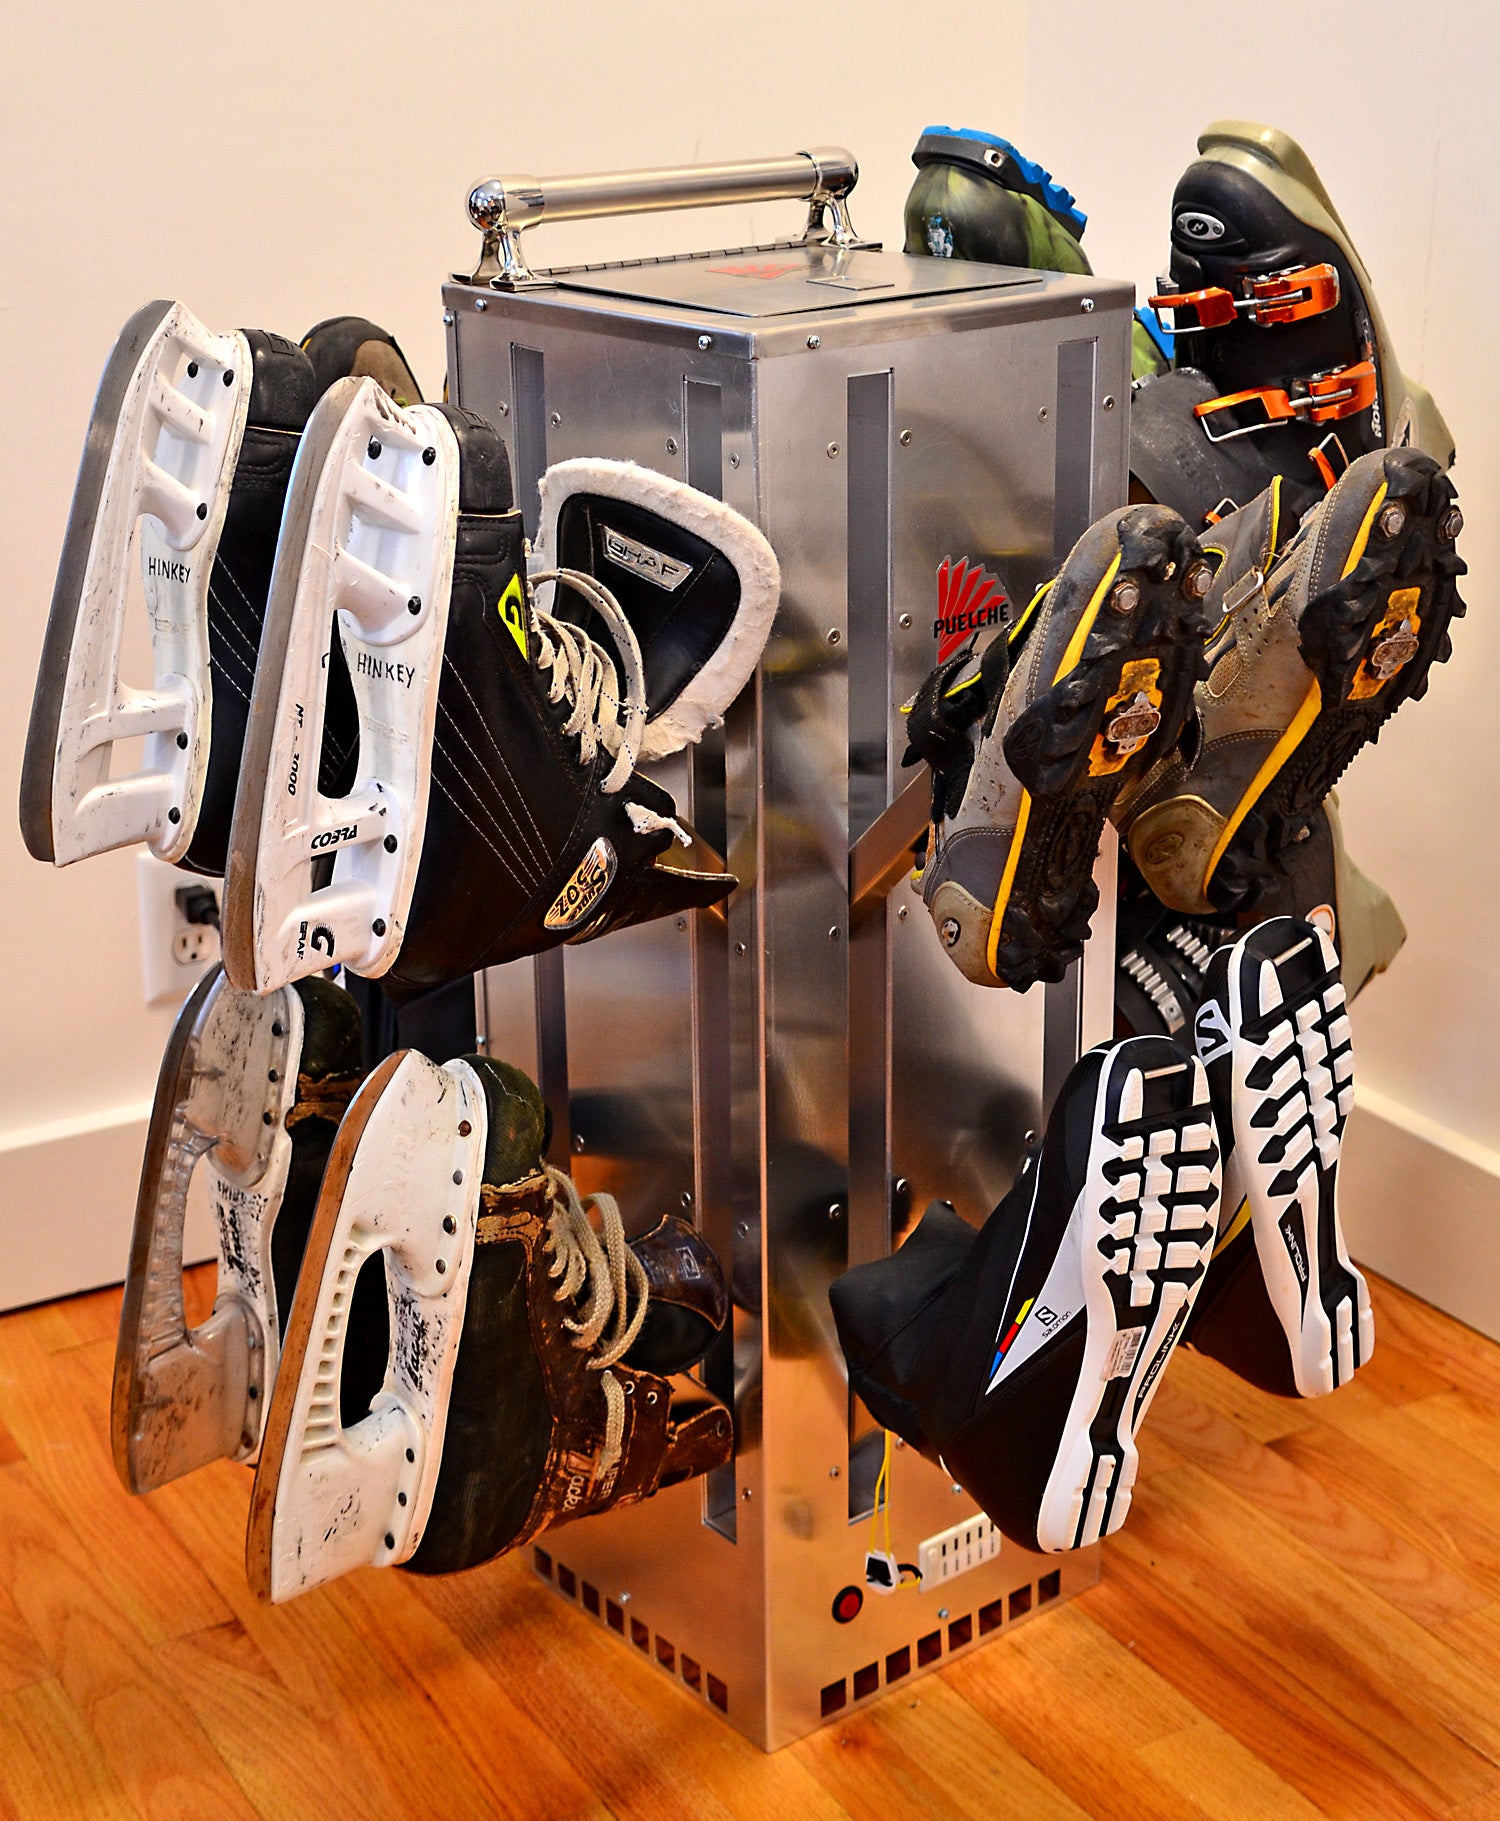 Hockey Skate & Glove Dryer Racks